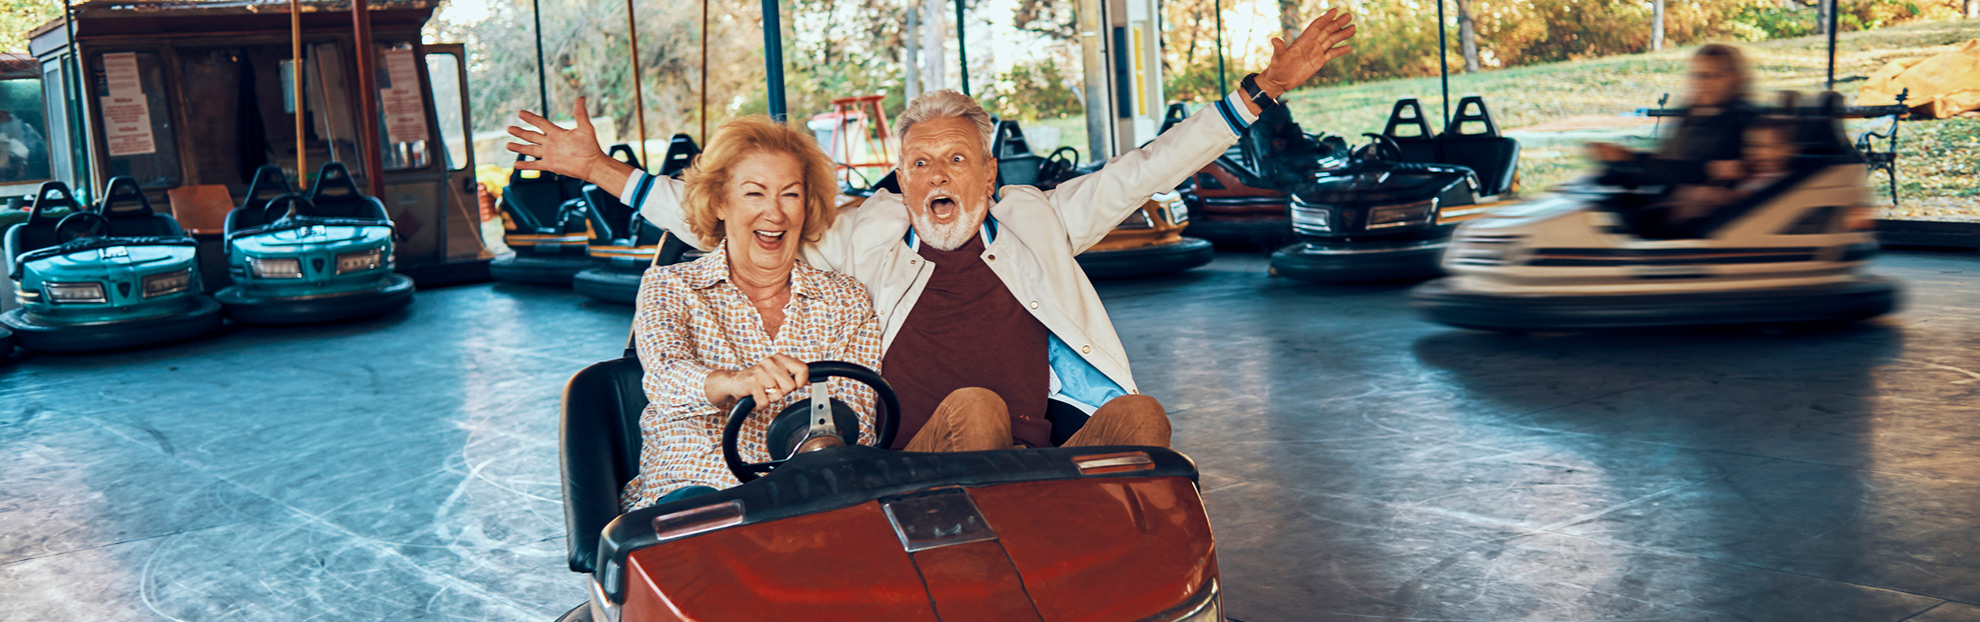 Older cataract surgery couple riding in a bumper car